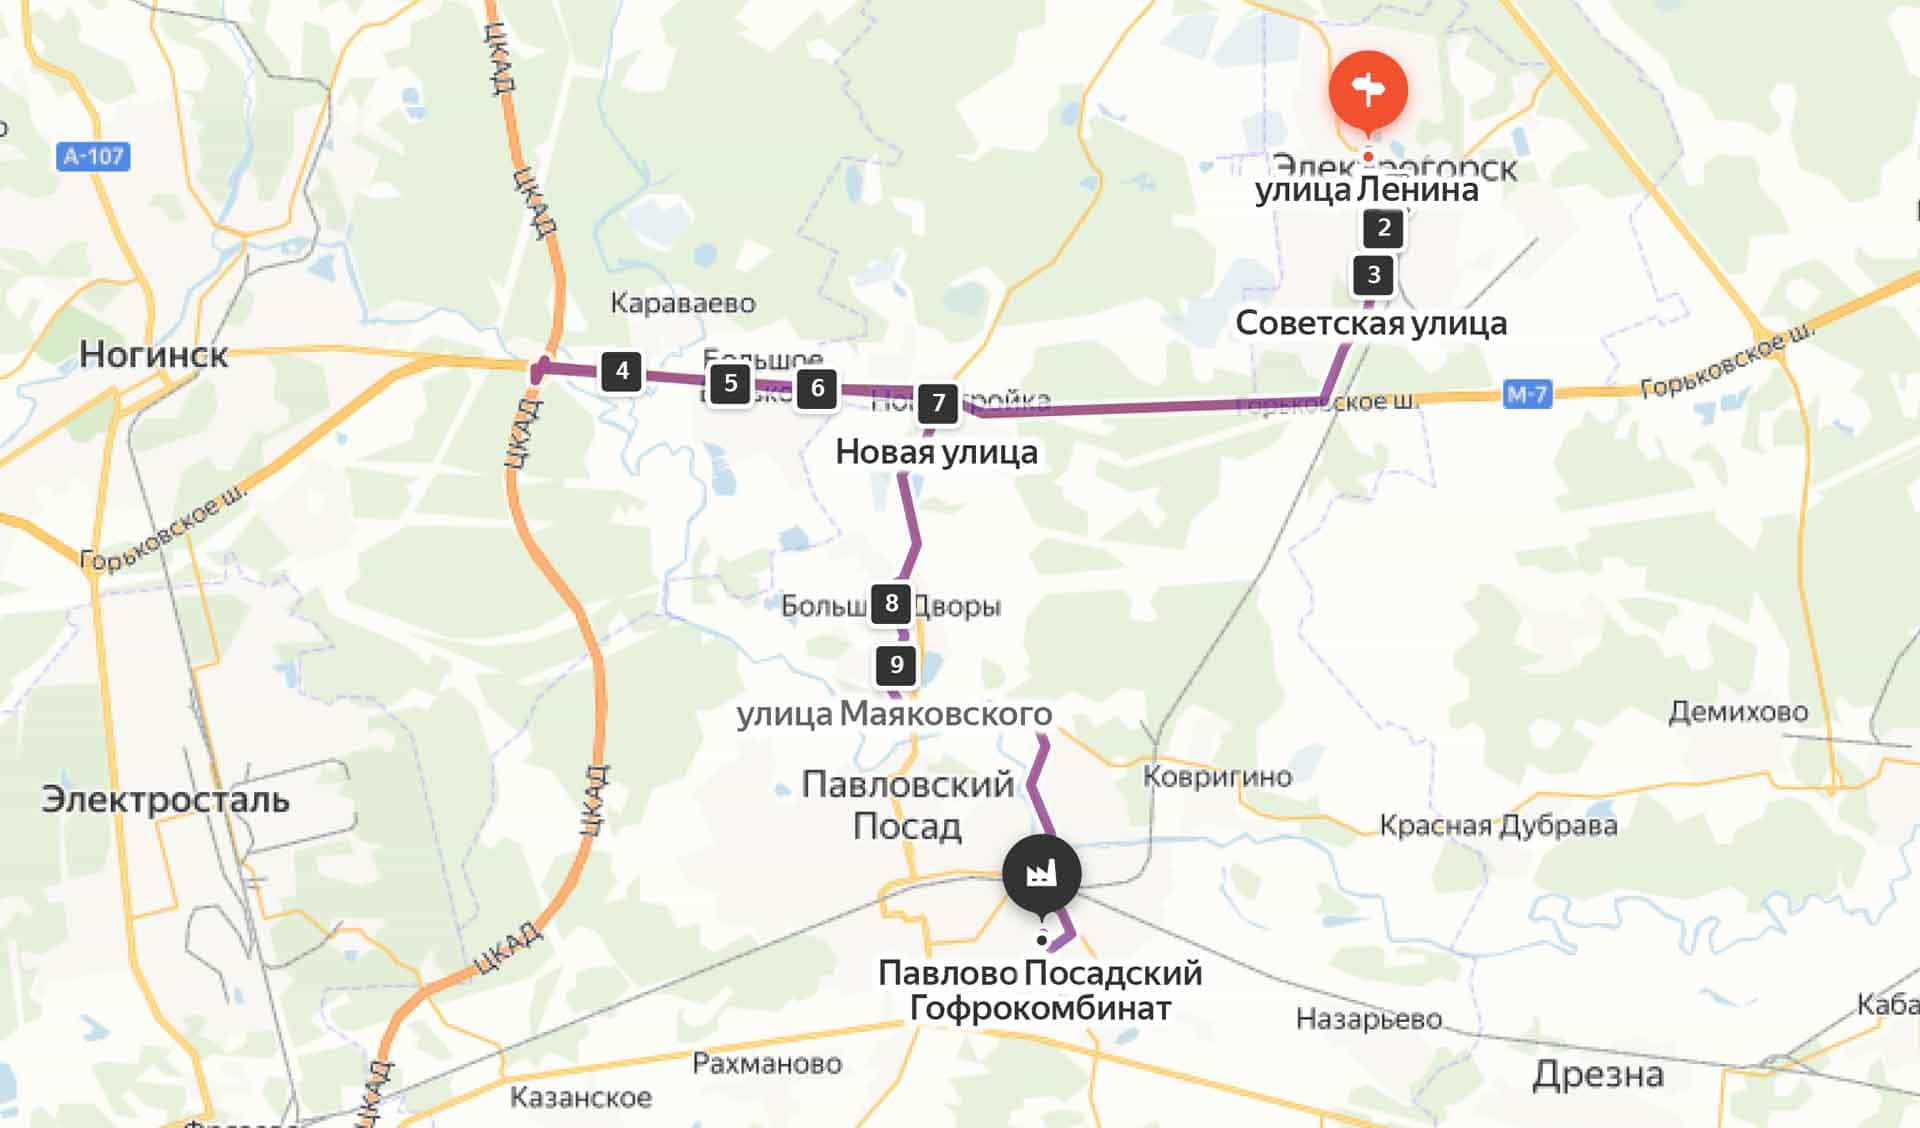 Схема проезда на Павлово-Посадский гофрокомбинат из Электрогорска